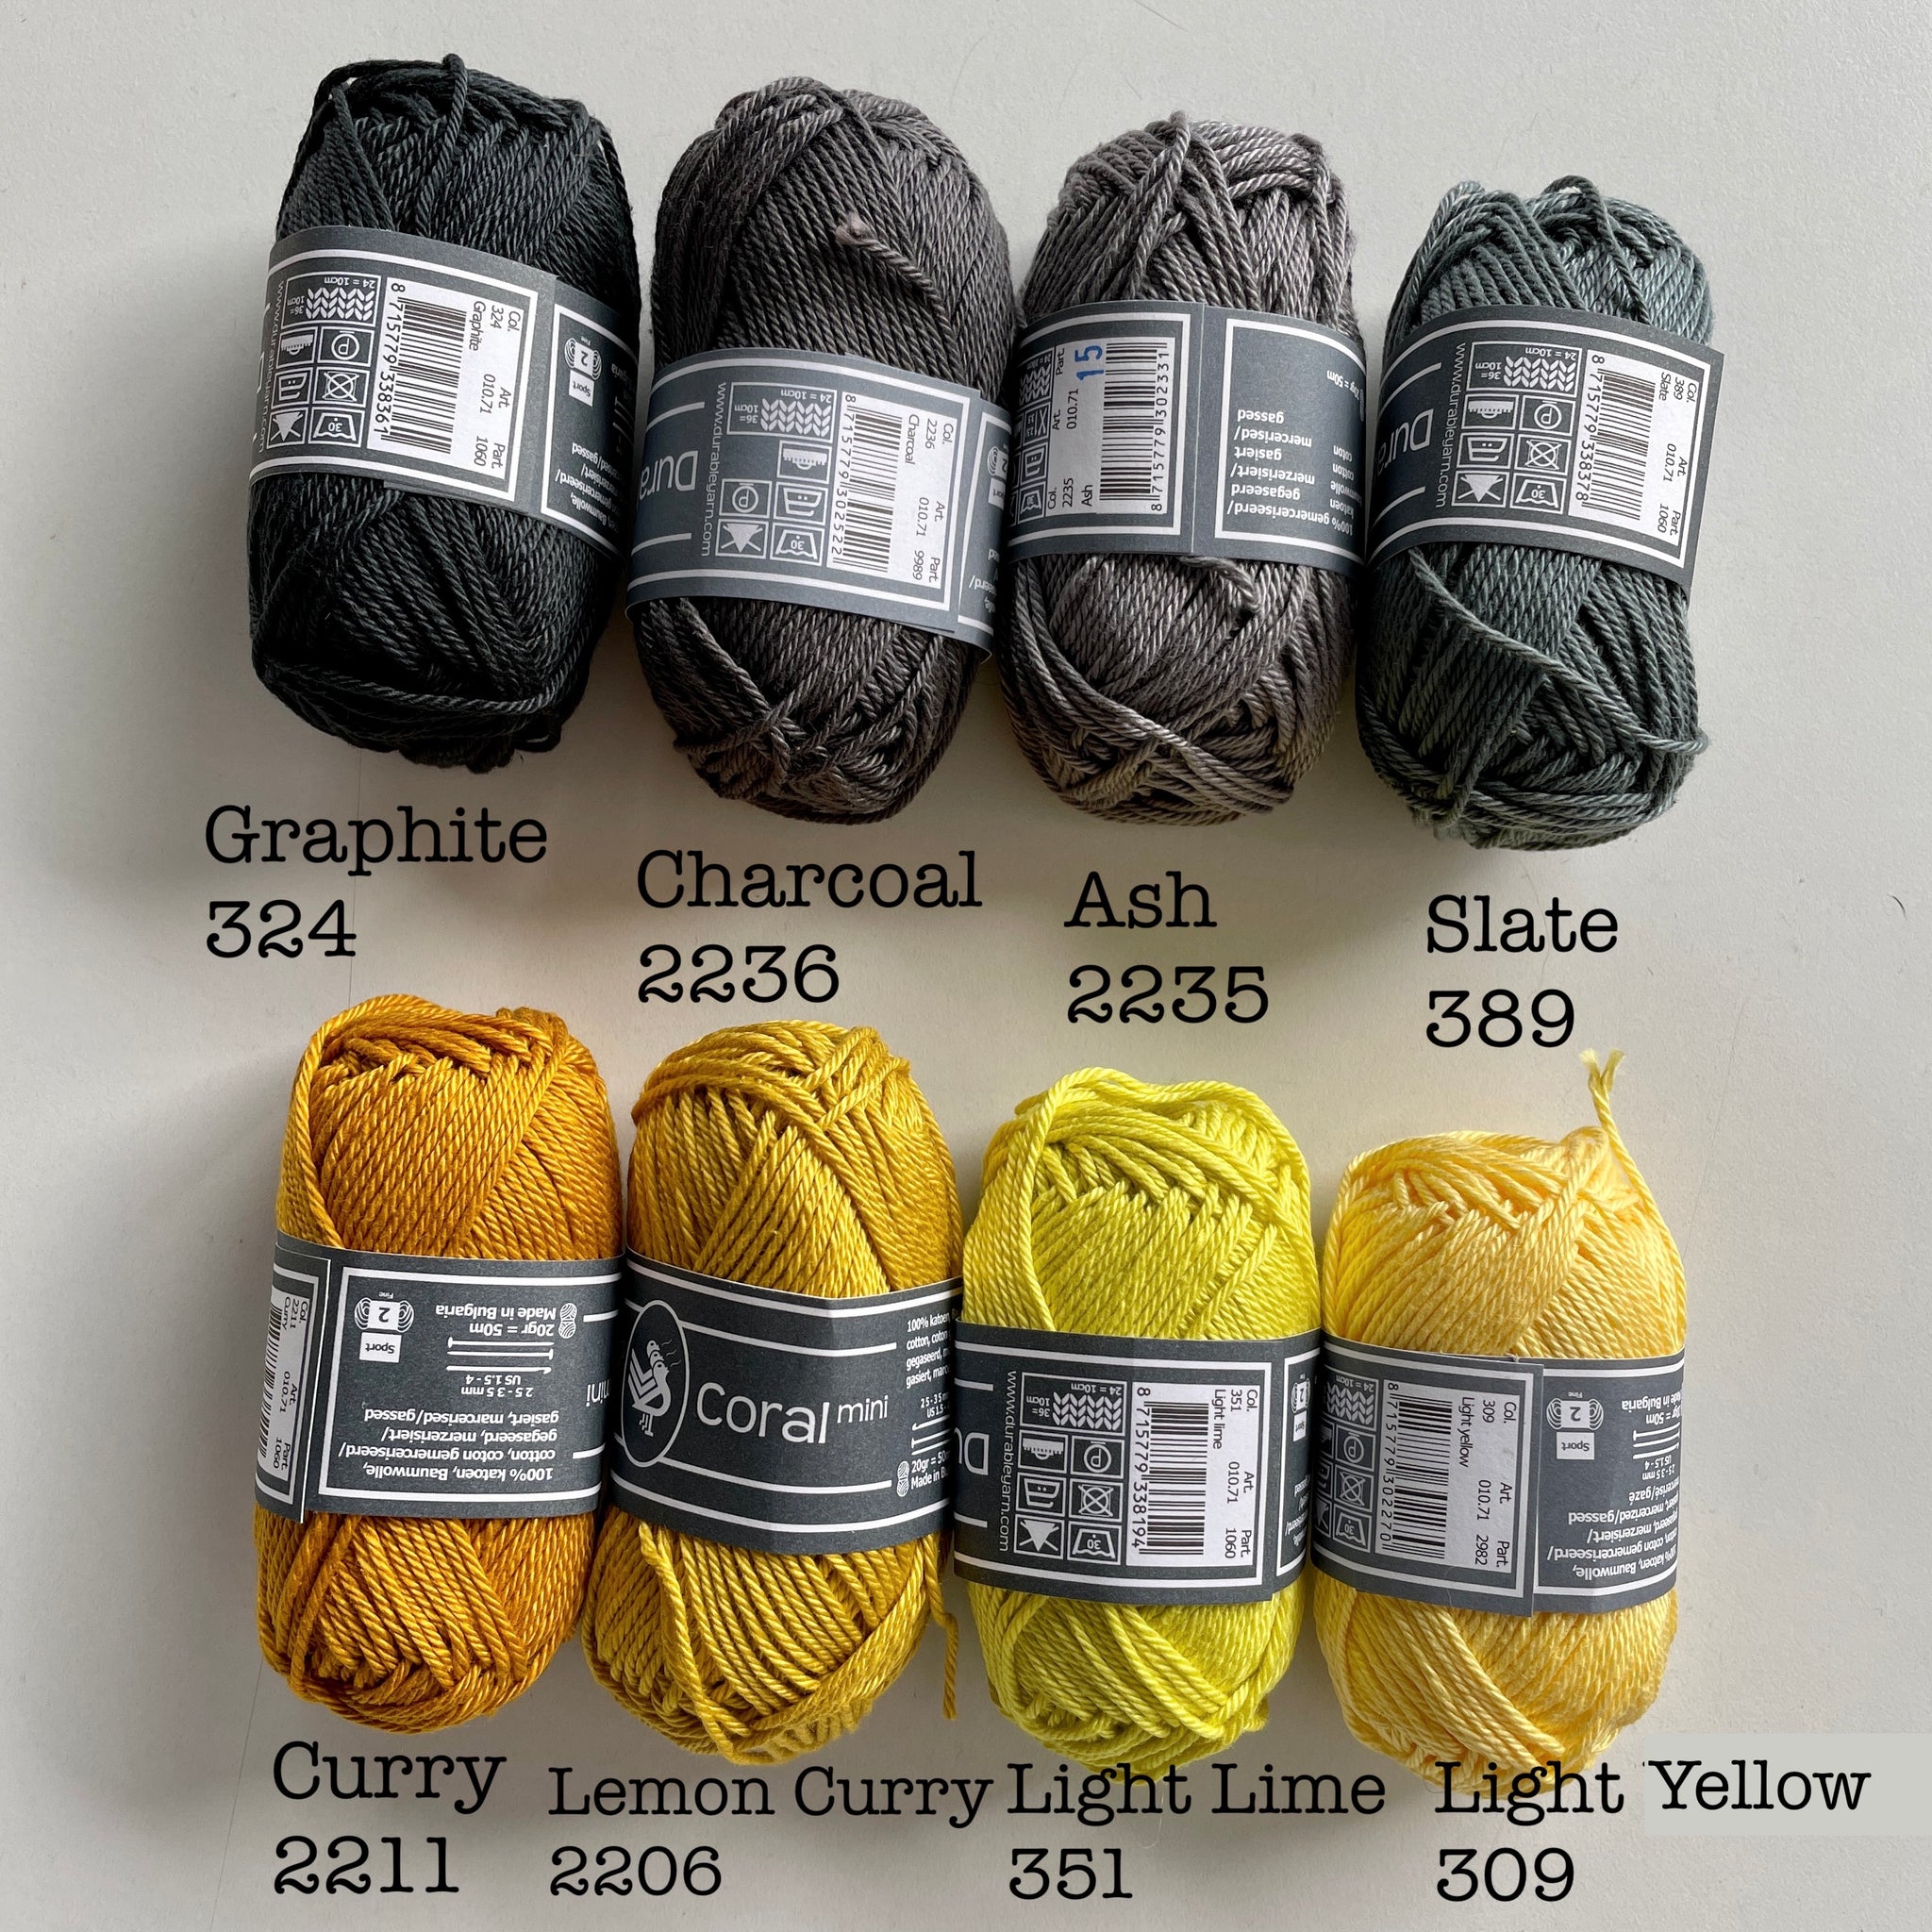 Cottons: three mini yarn reviews